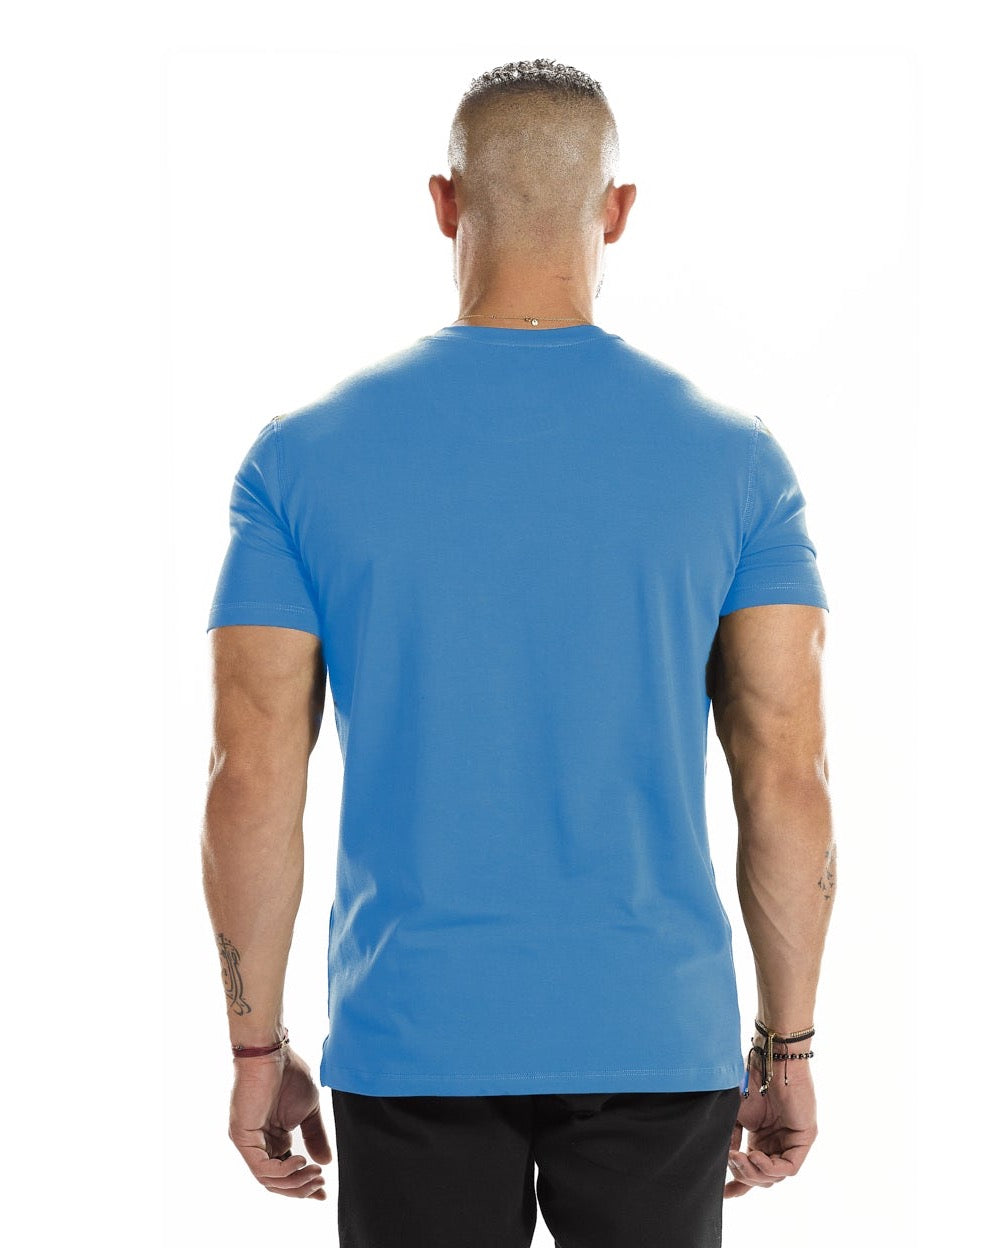 Bar-Basic T-shirt 2.0 [Cotton] - T-Shirt - Gym Apparel Egypt